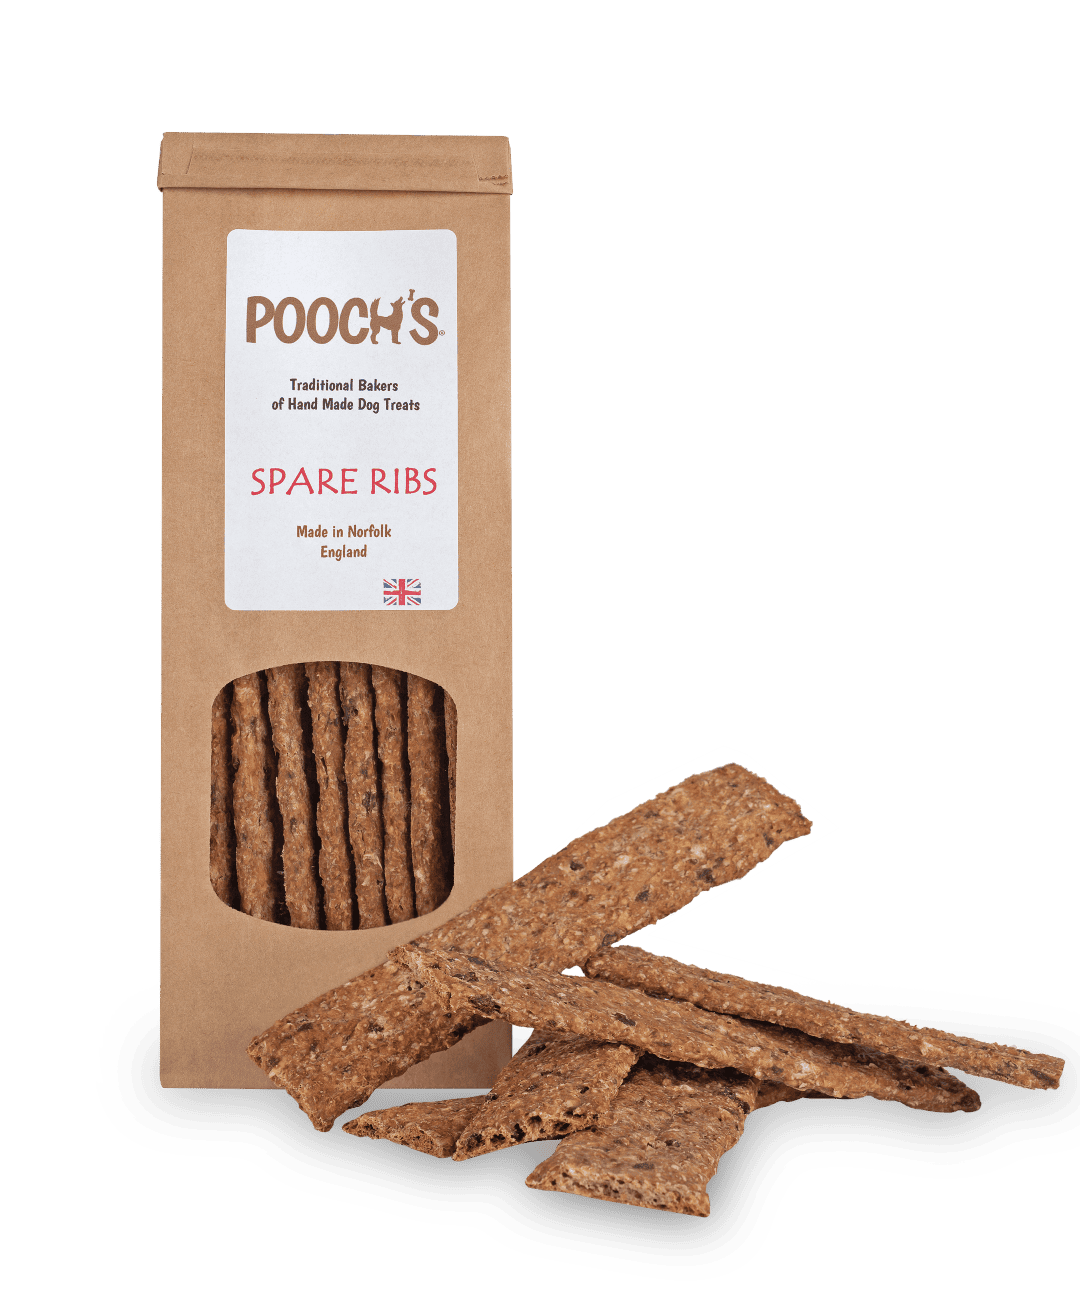 Pooch's Hand-baked Treats. Delicious!